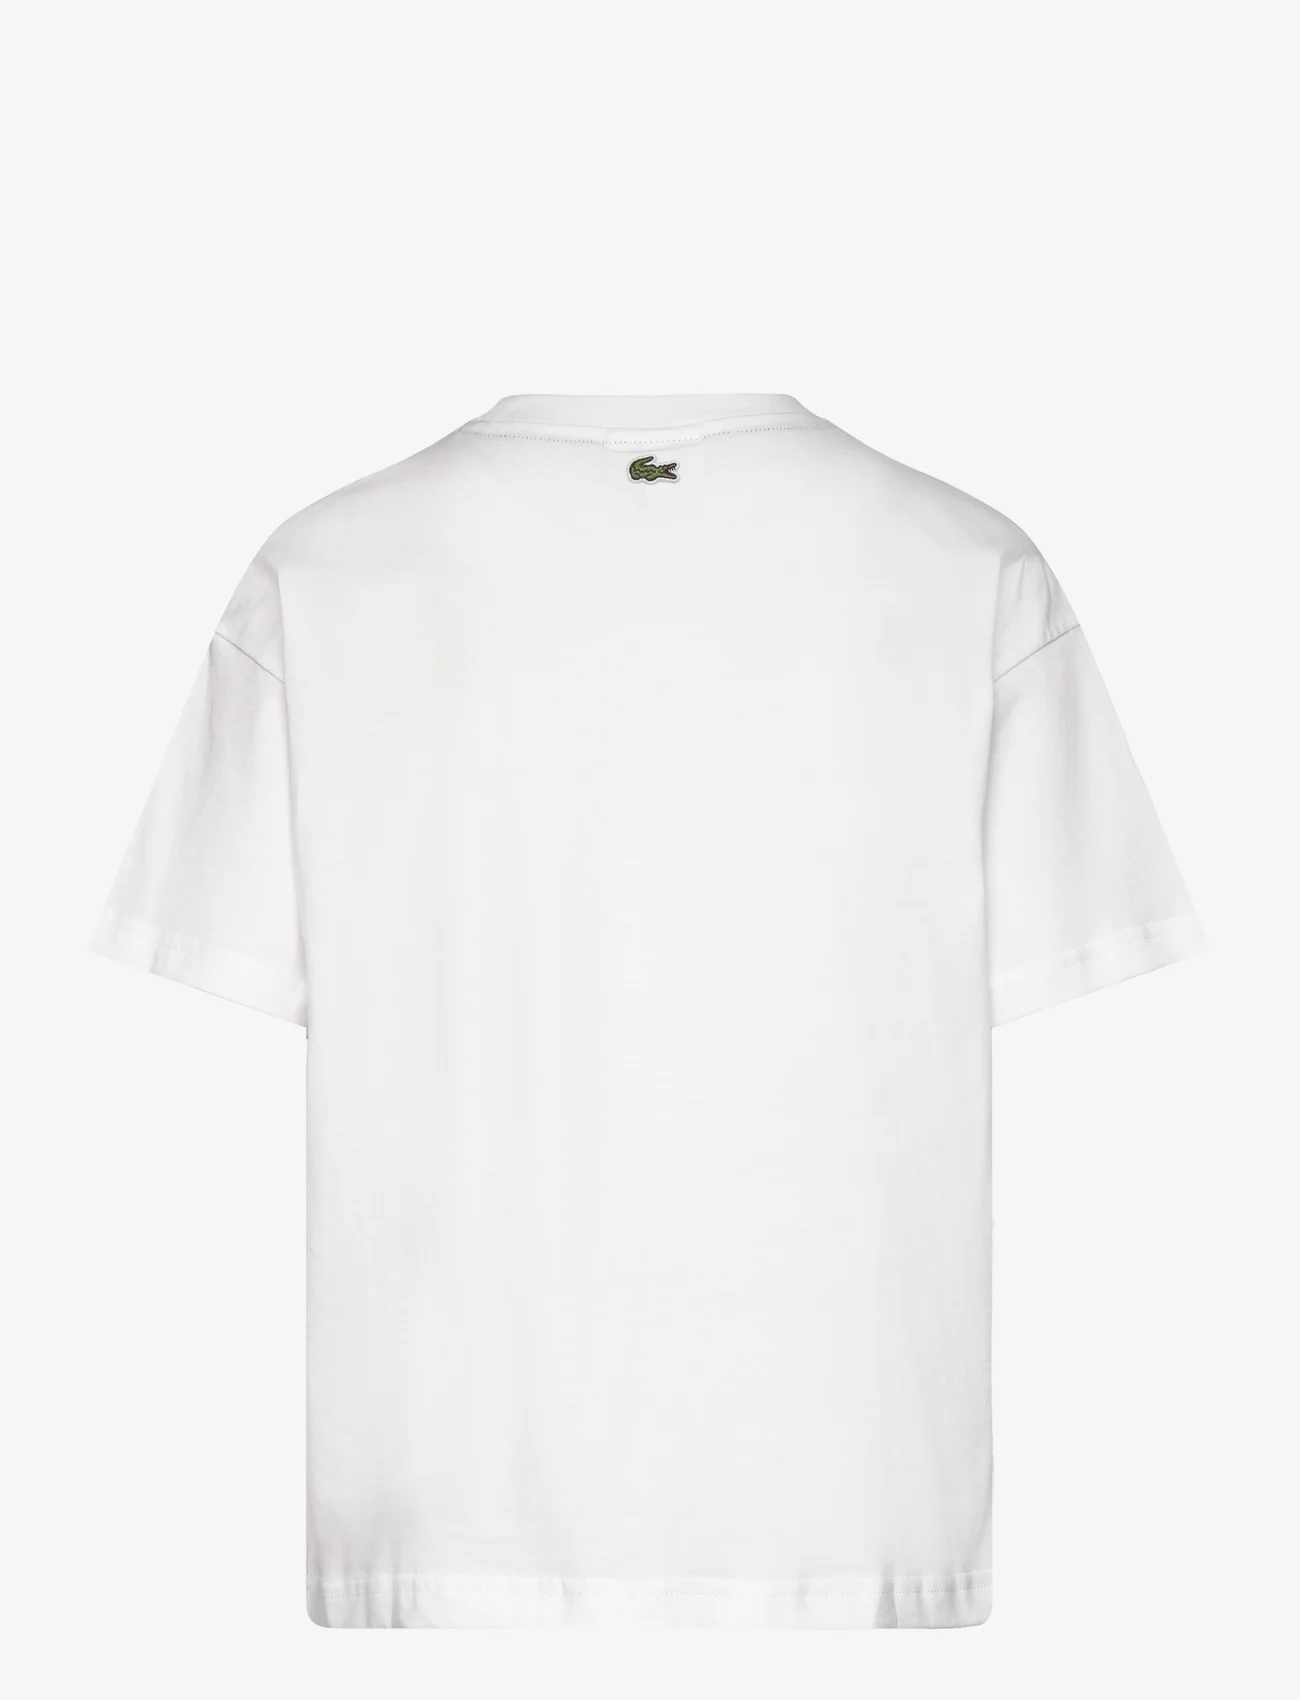 Lacoste - TEE-SHIRT&TURTLE - kortärmade t-shirts - white - 1